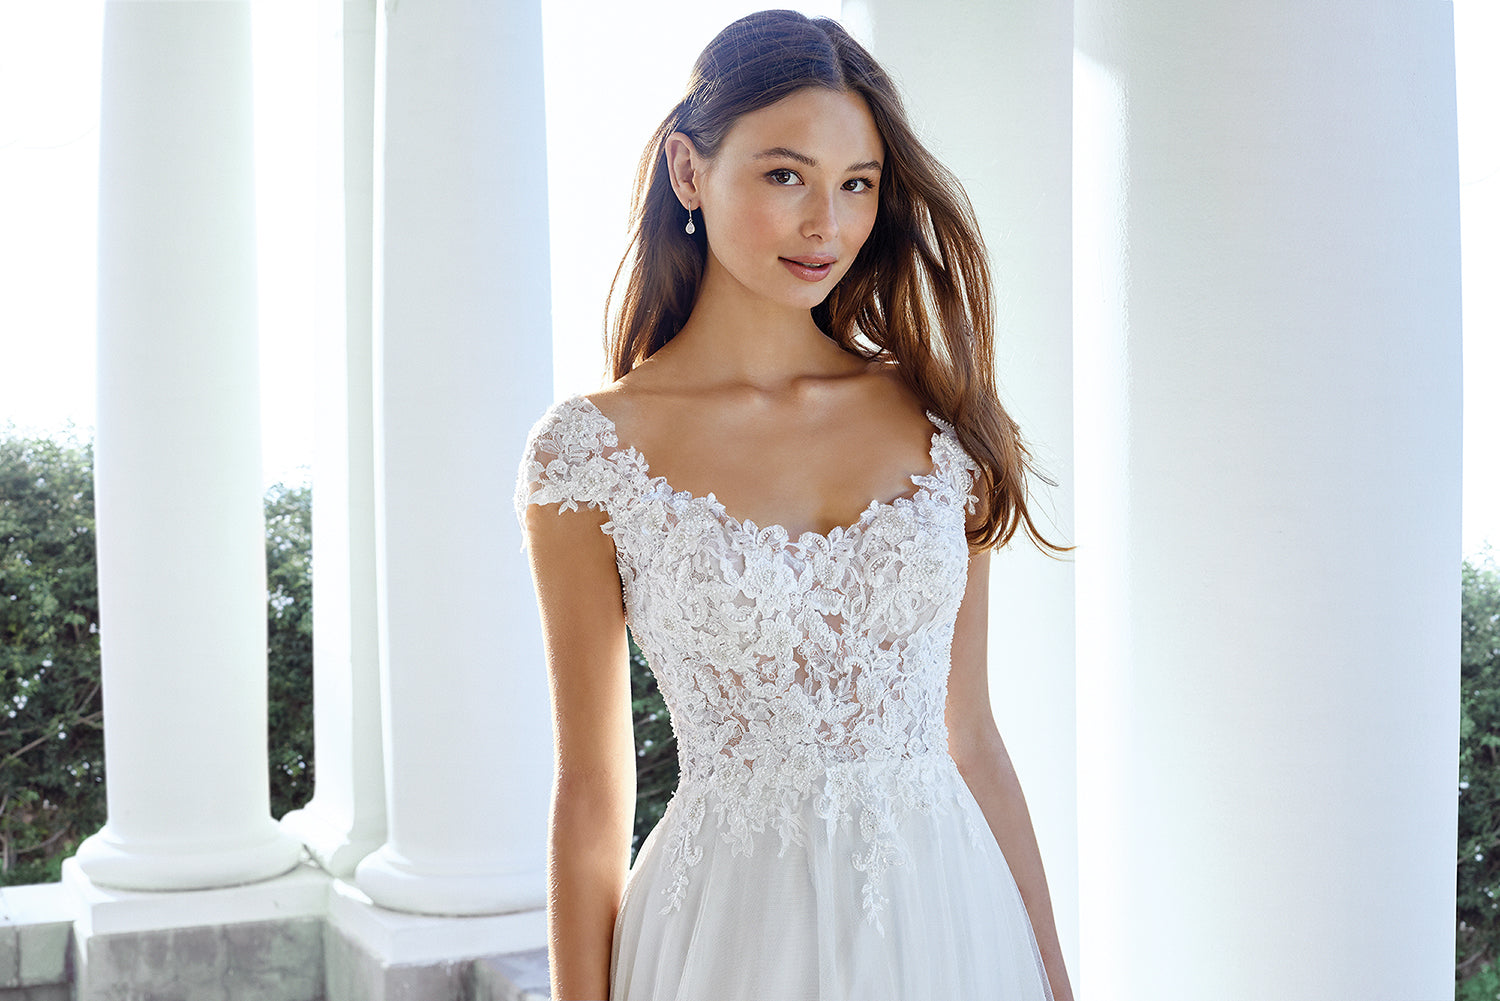 Scoop Neckline Lace Illusion Bodice Soft A-Line Skirt Wedding Dresses Online - #11131